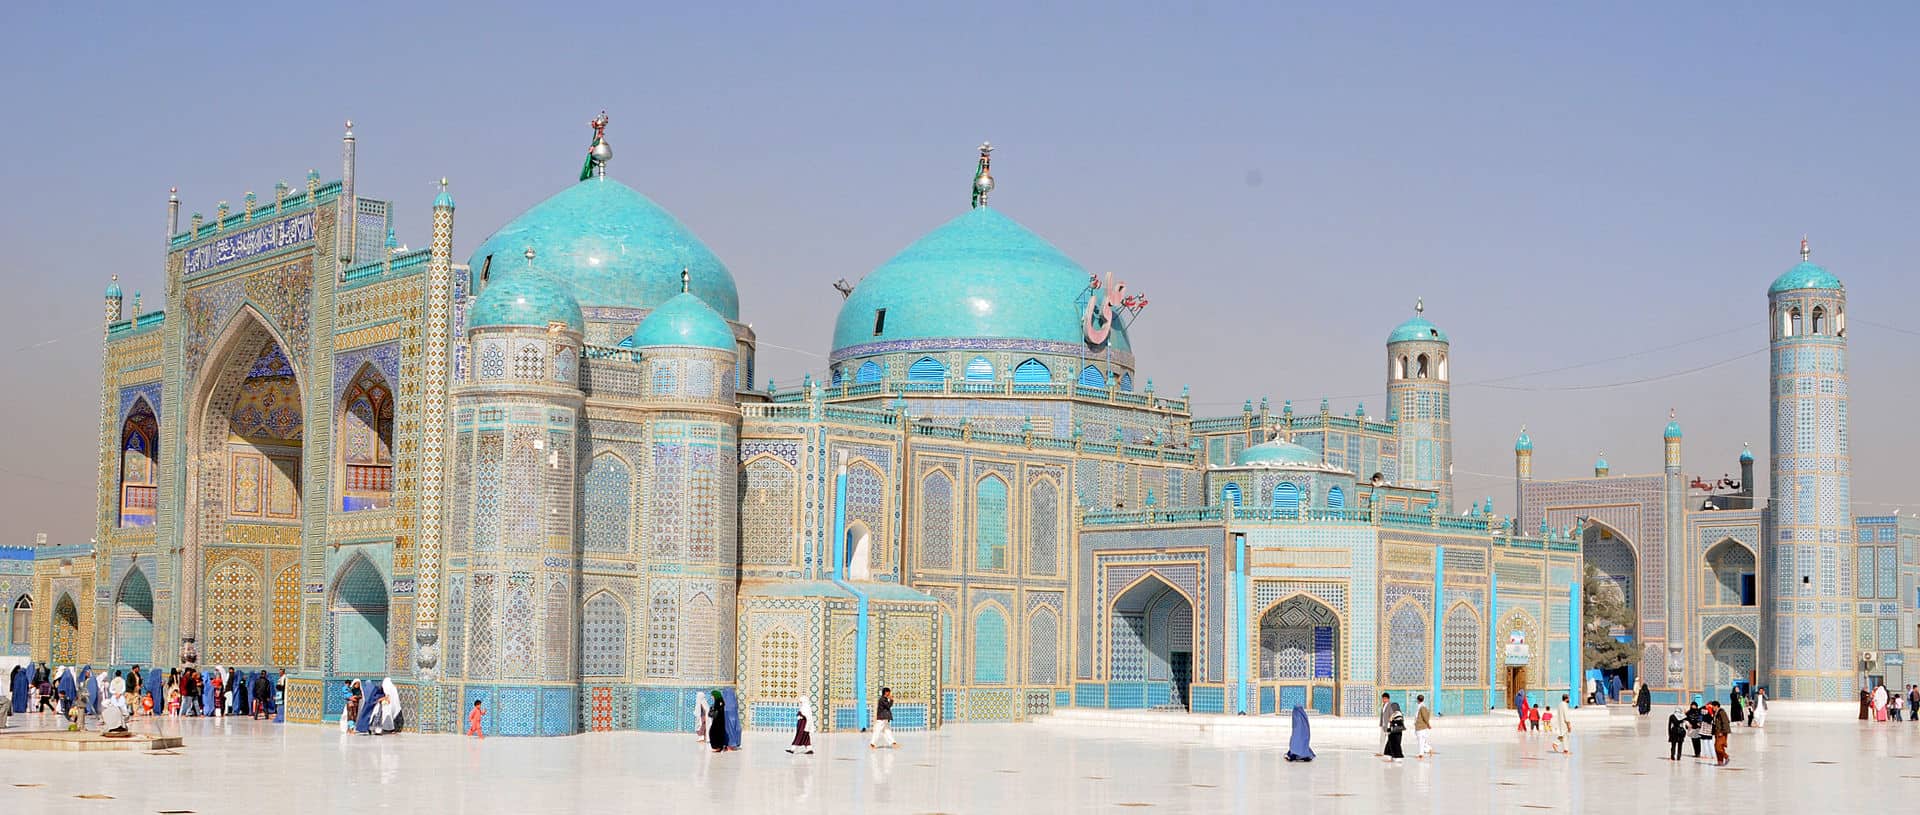 National monument of Afghanistan - Mazar-i-Sharif, Shrine of Ali (The Blue Mosque) 